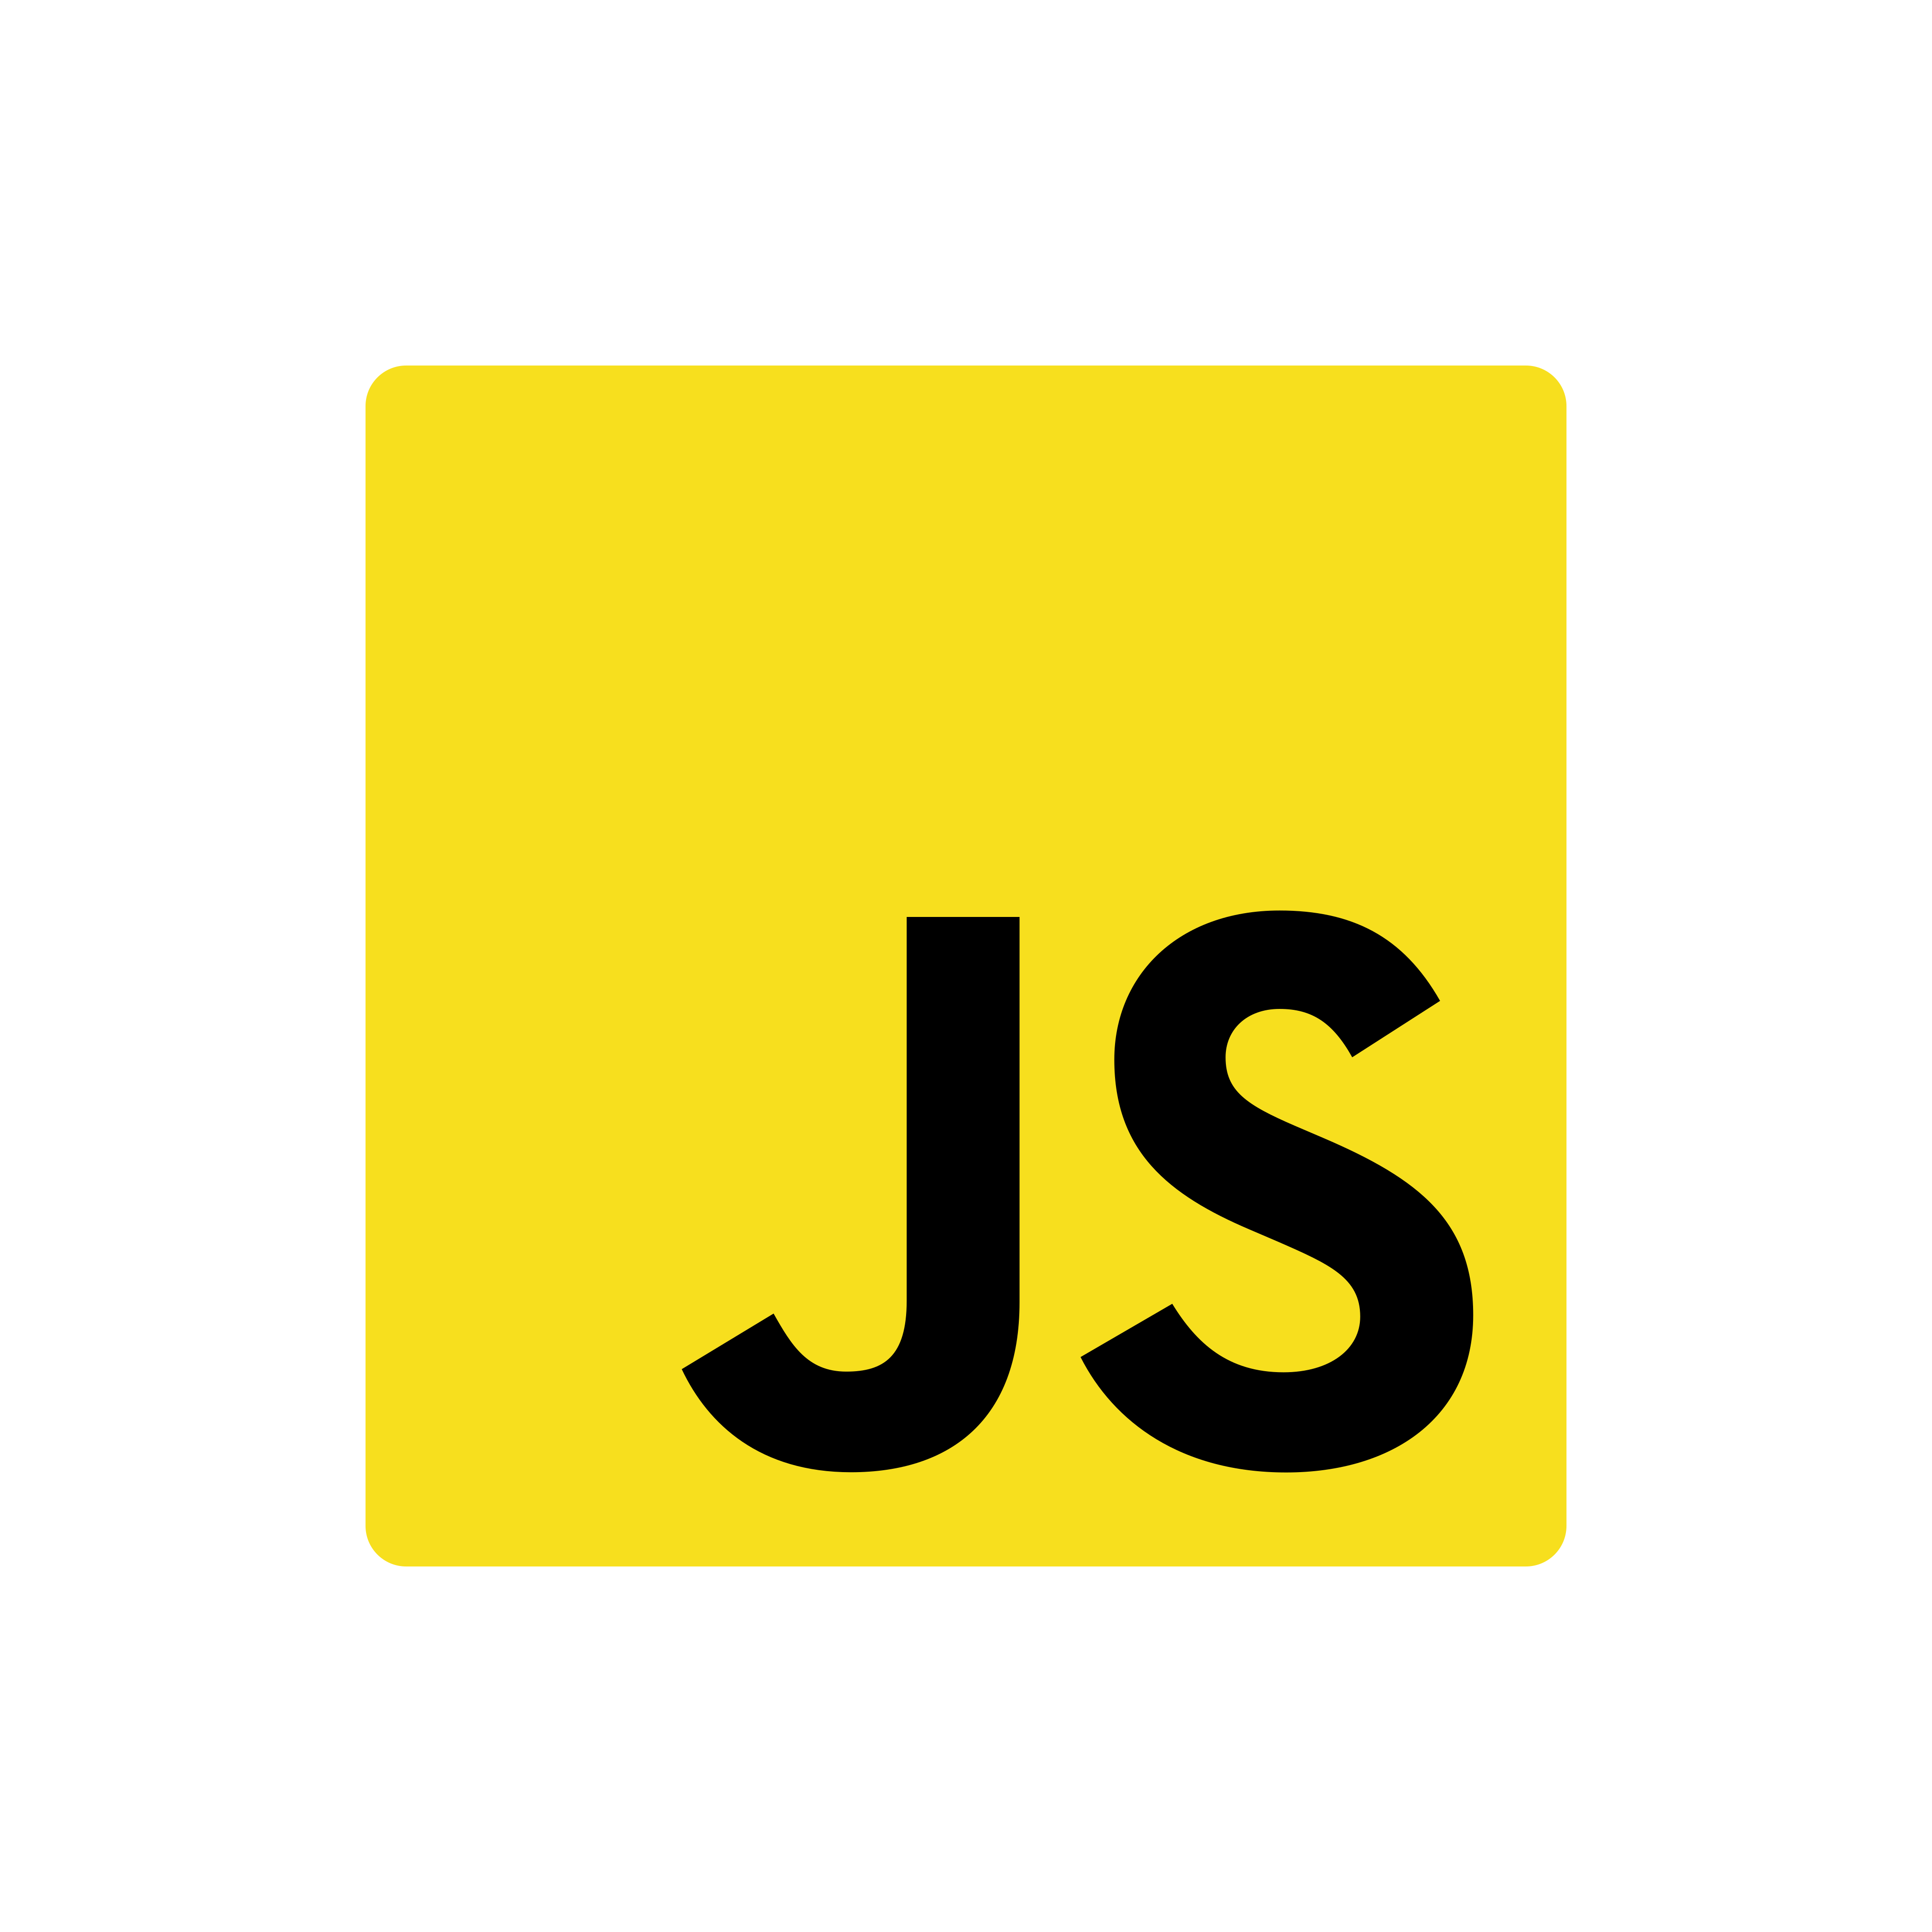 javascript logo 0 - JavaScript Logo